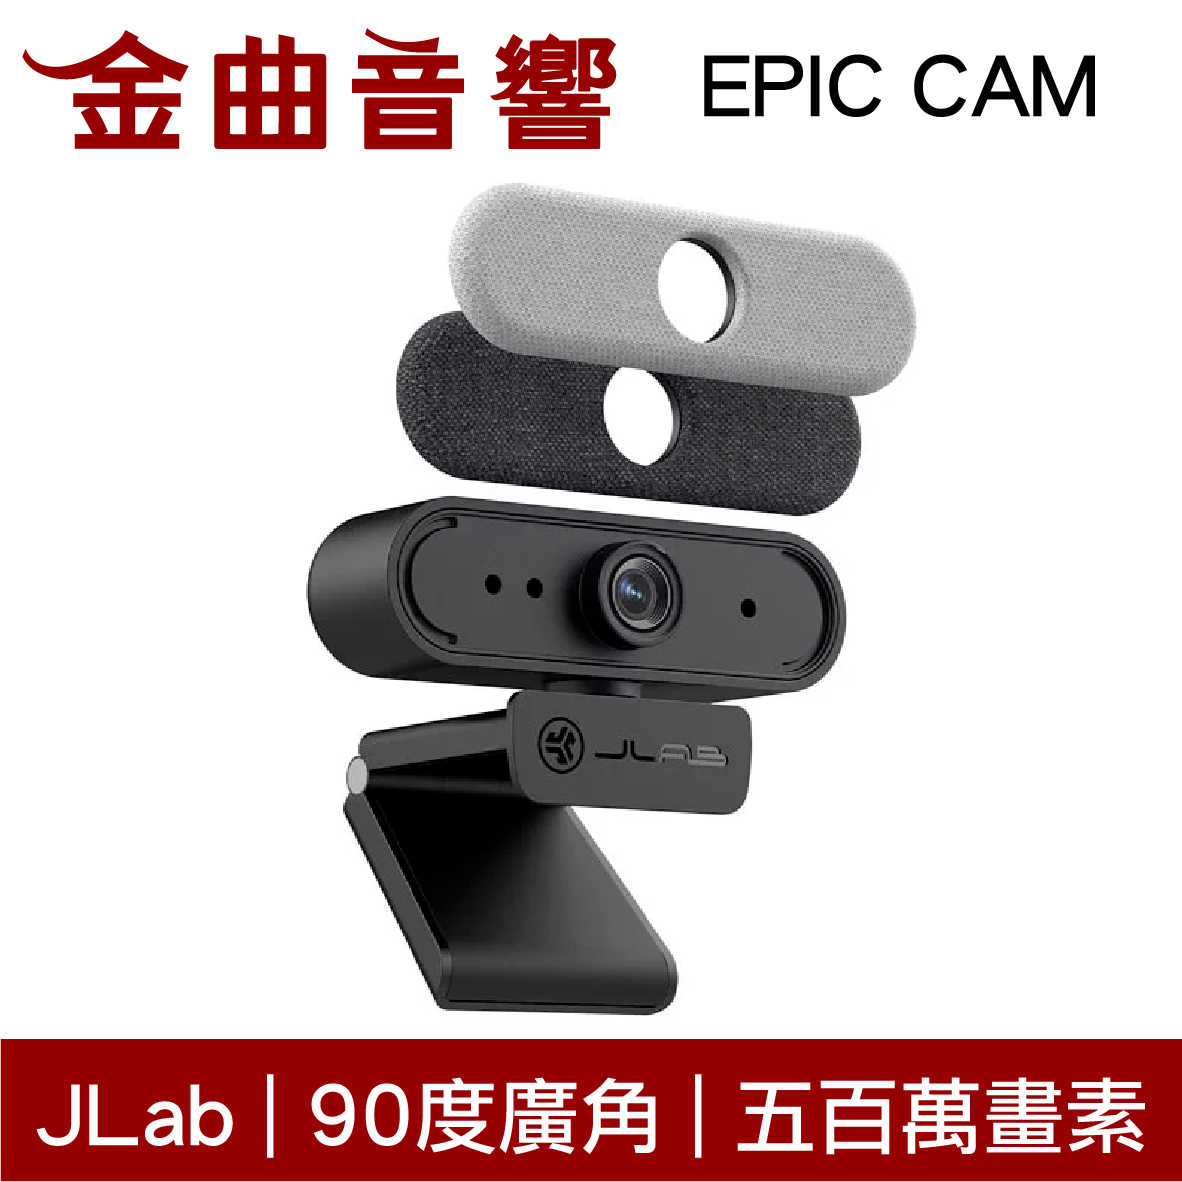 JLab EPIC CAM 2K 五百萬畫素 90度廣角 四倍縮放 高畫質 網路攝影機 | 金曲音響